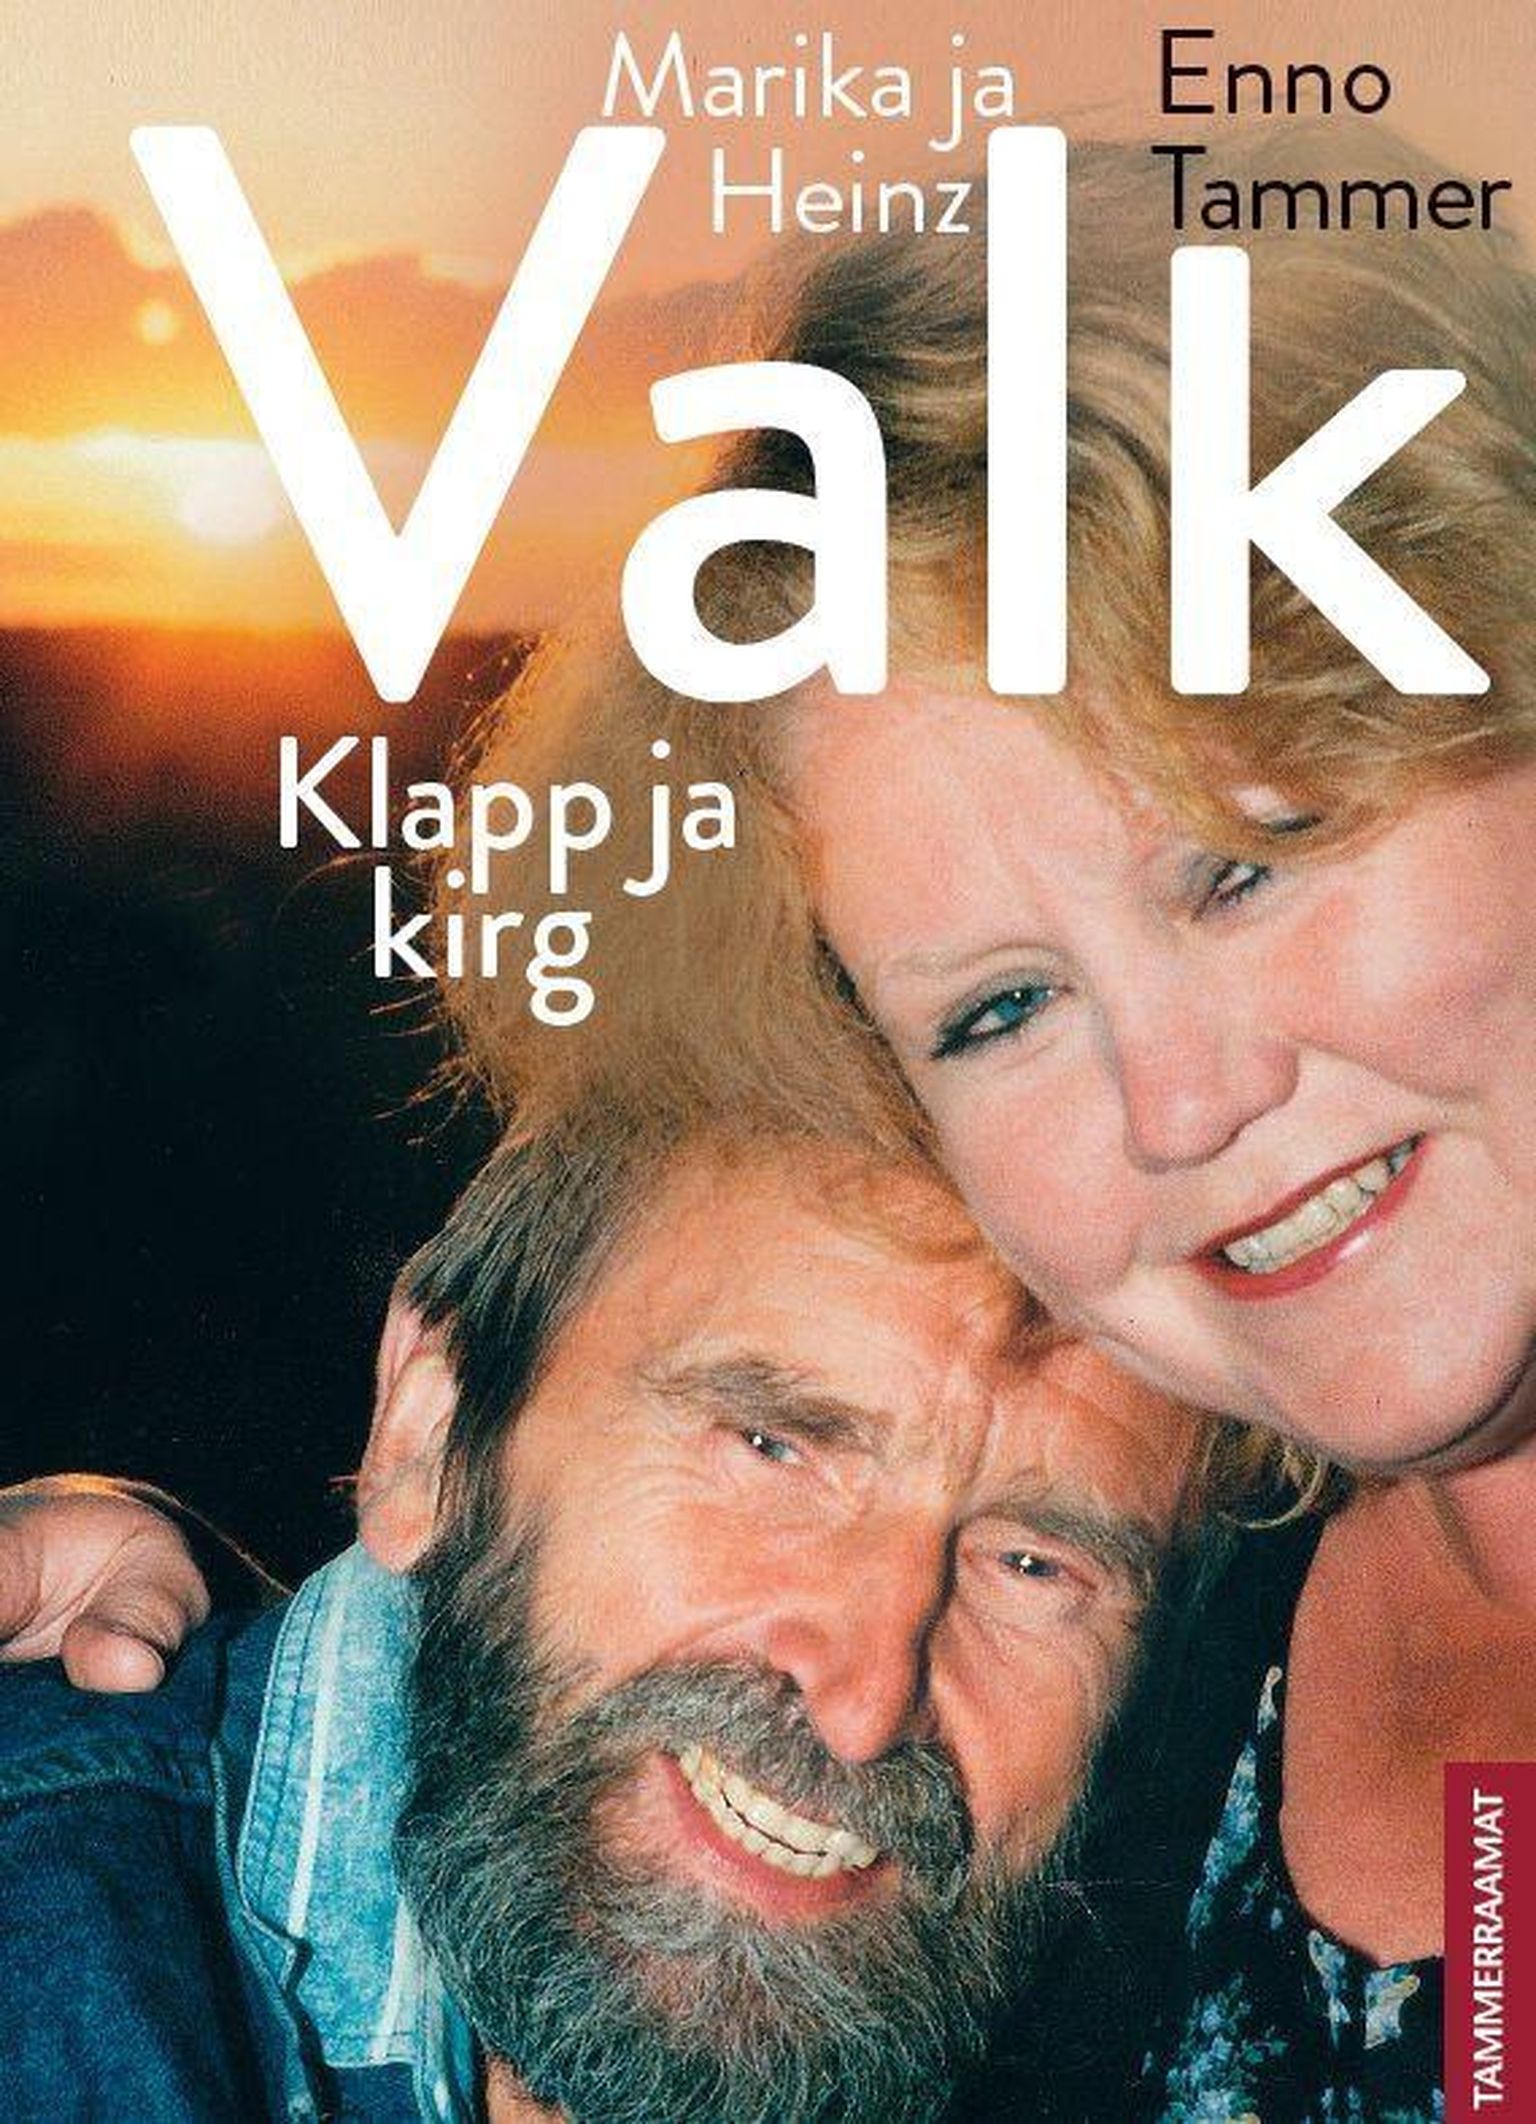 Enno Tammer, «Klapp ja kirg. Marika ja Heinz Valk».